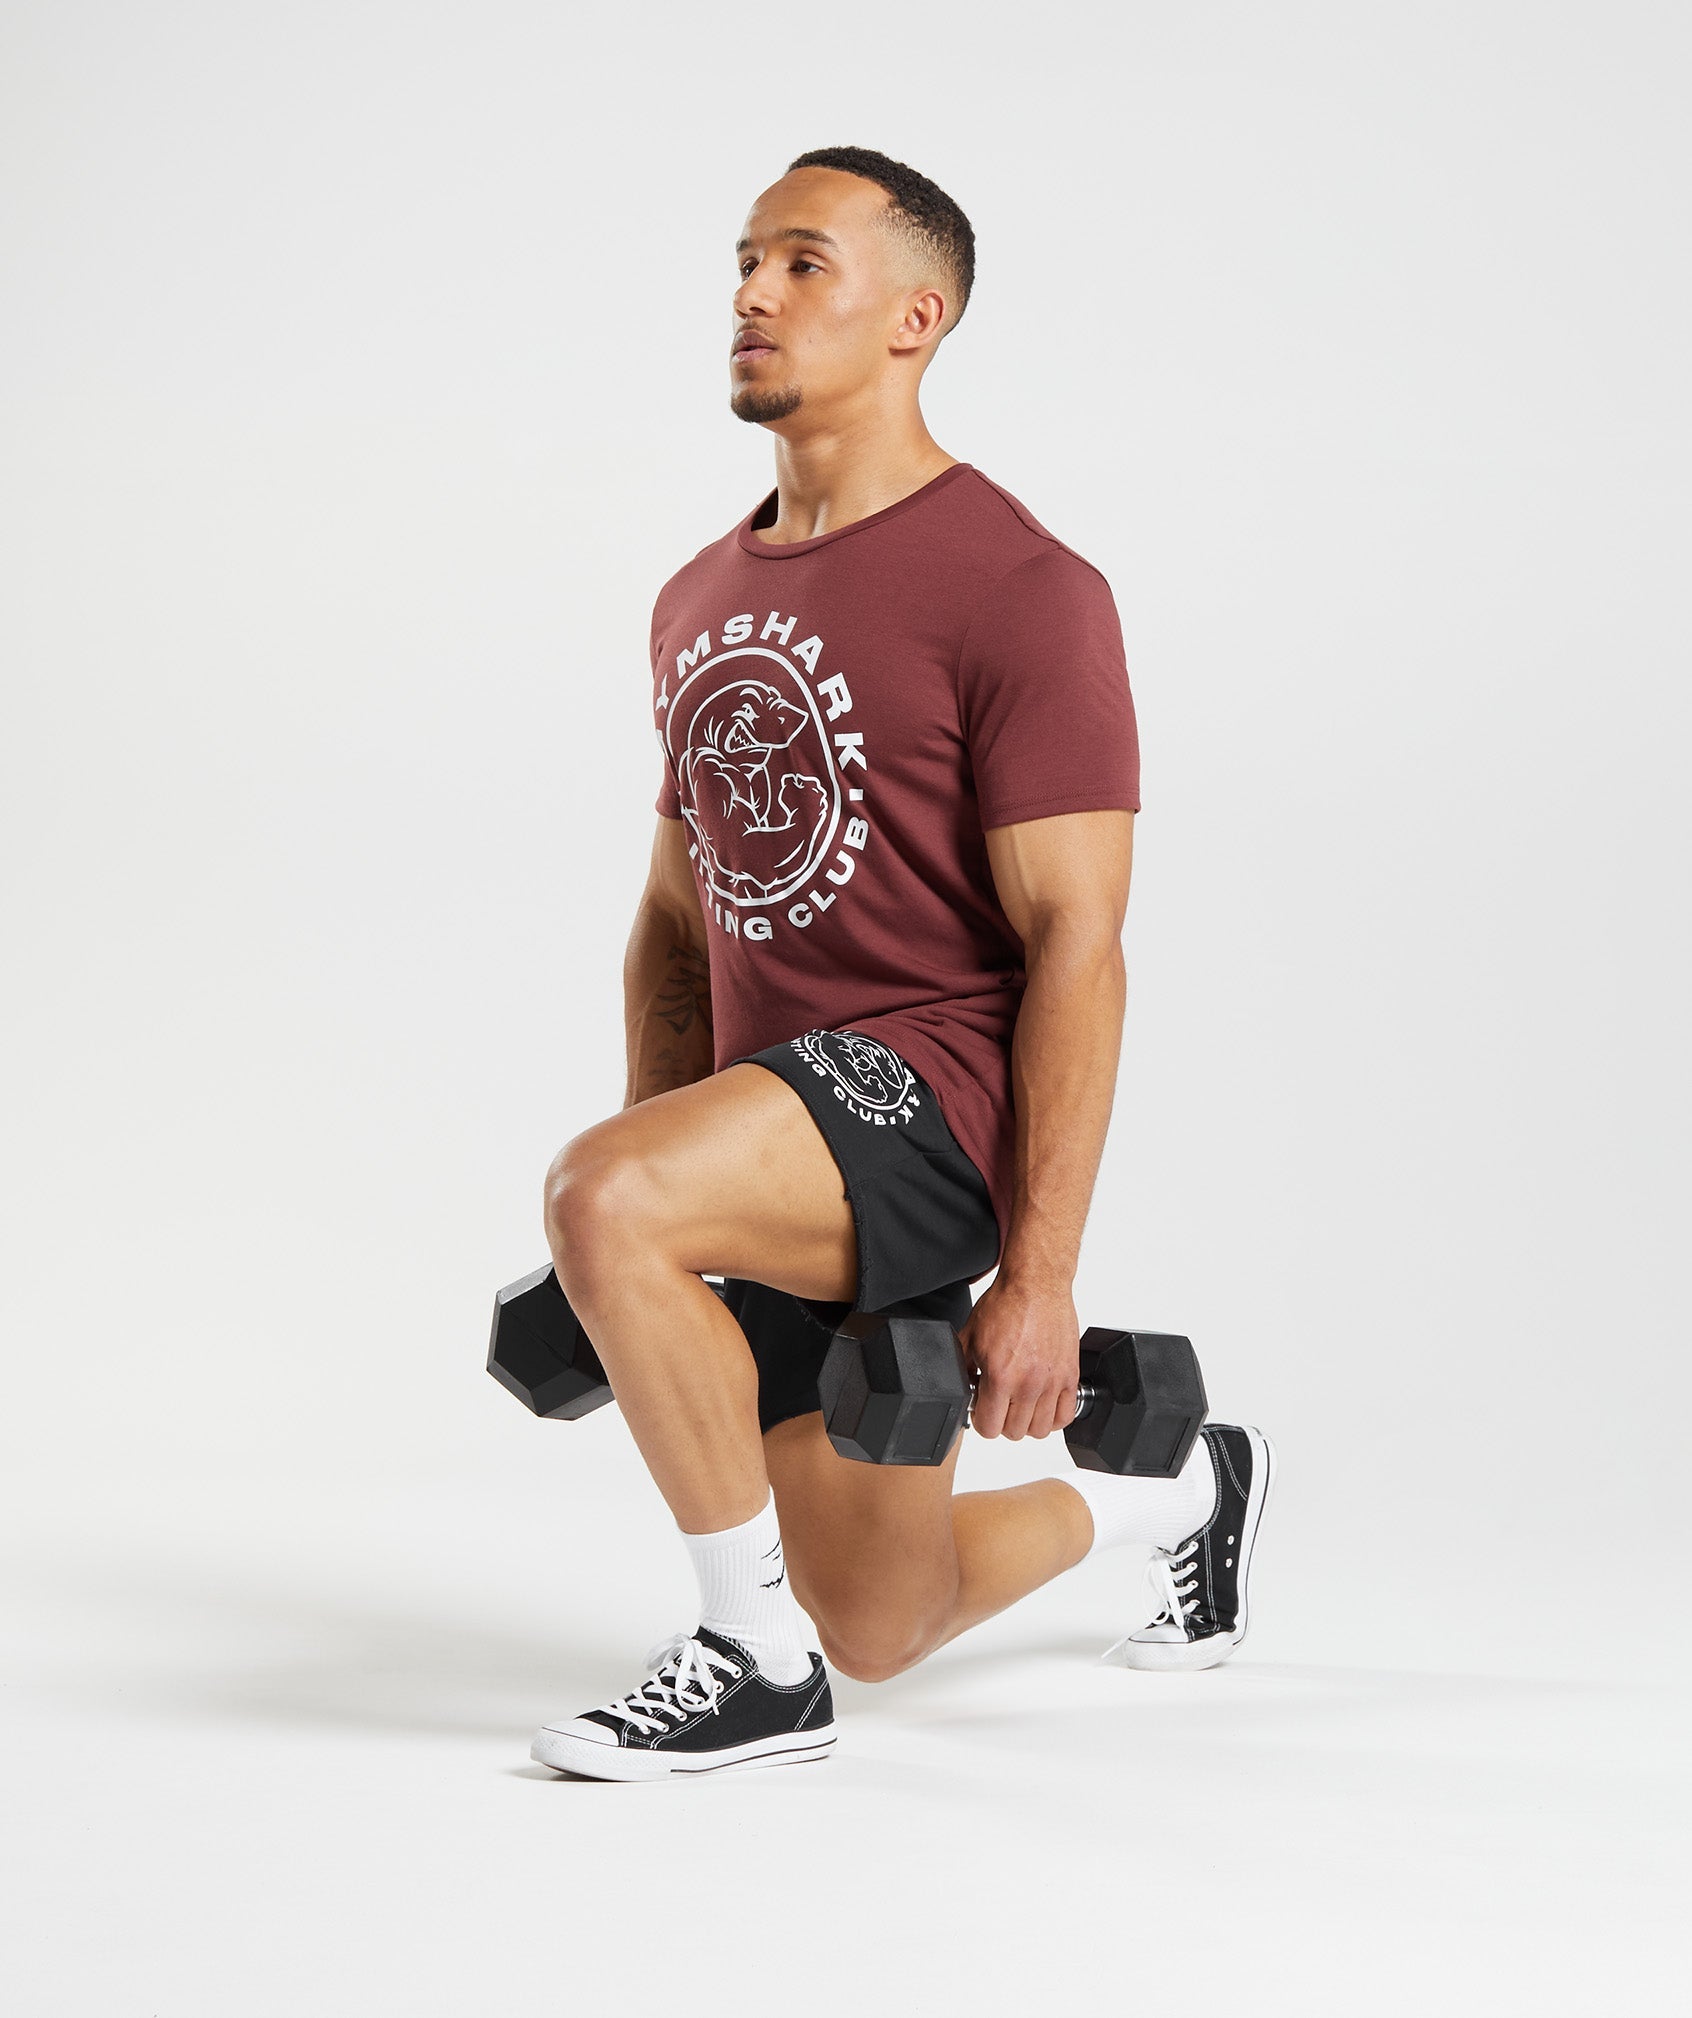 NEW @Gymshark Legacy T-Shirt × 4 Shorts Combo - dropping AUG 31